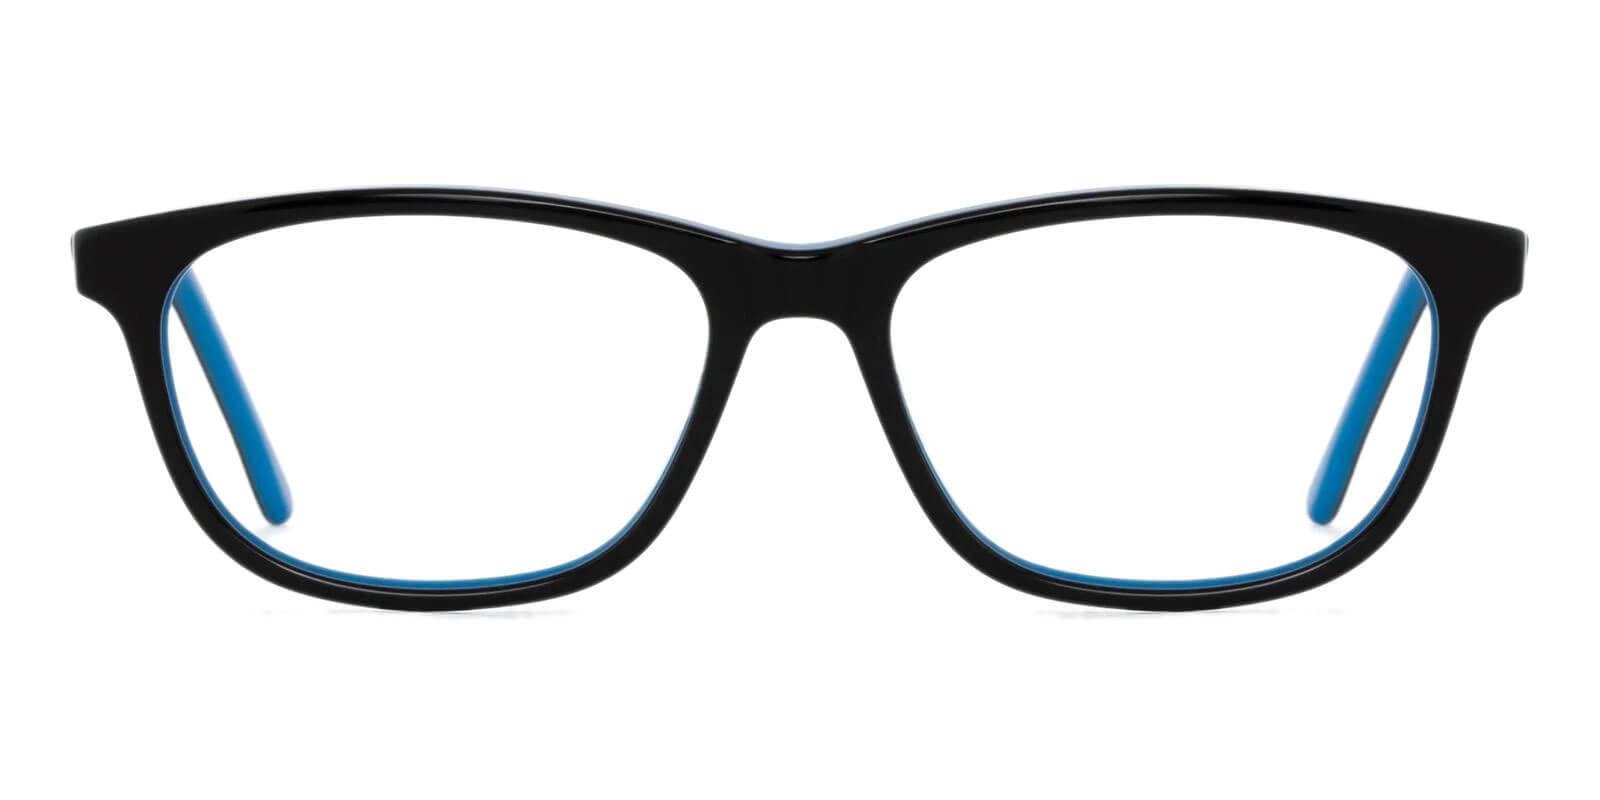 Machovec Blue Acetate Eyeglasses , SpringHinges , UniversalBridgeFit Frames from ABBE Glasses